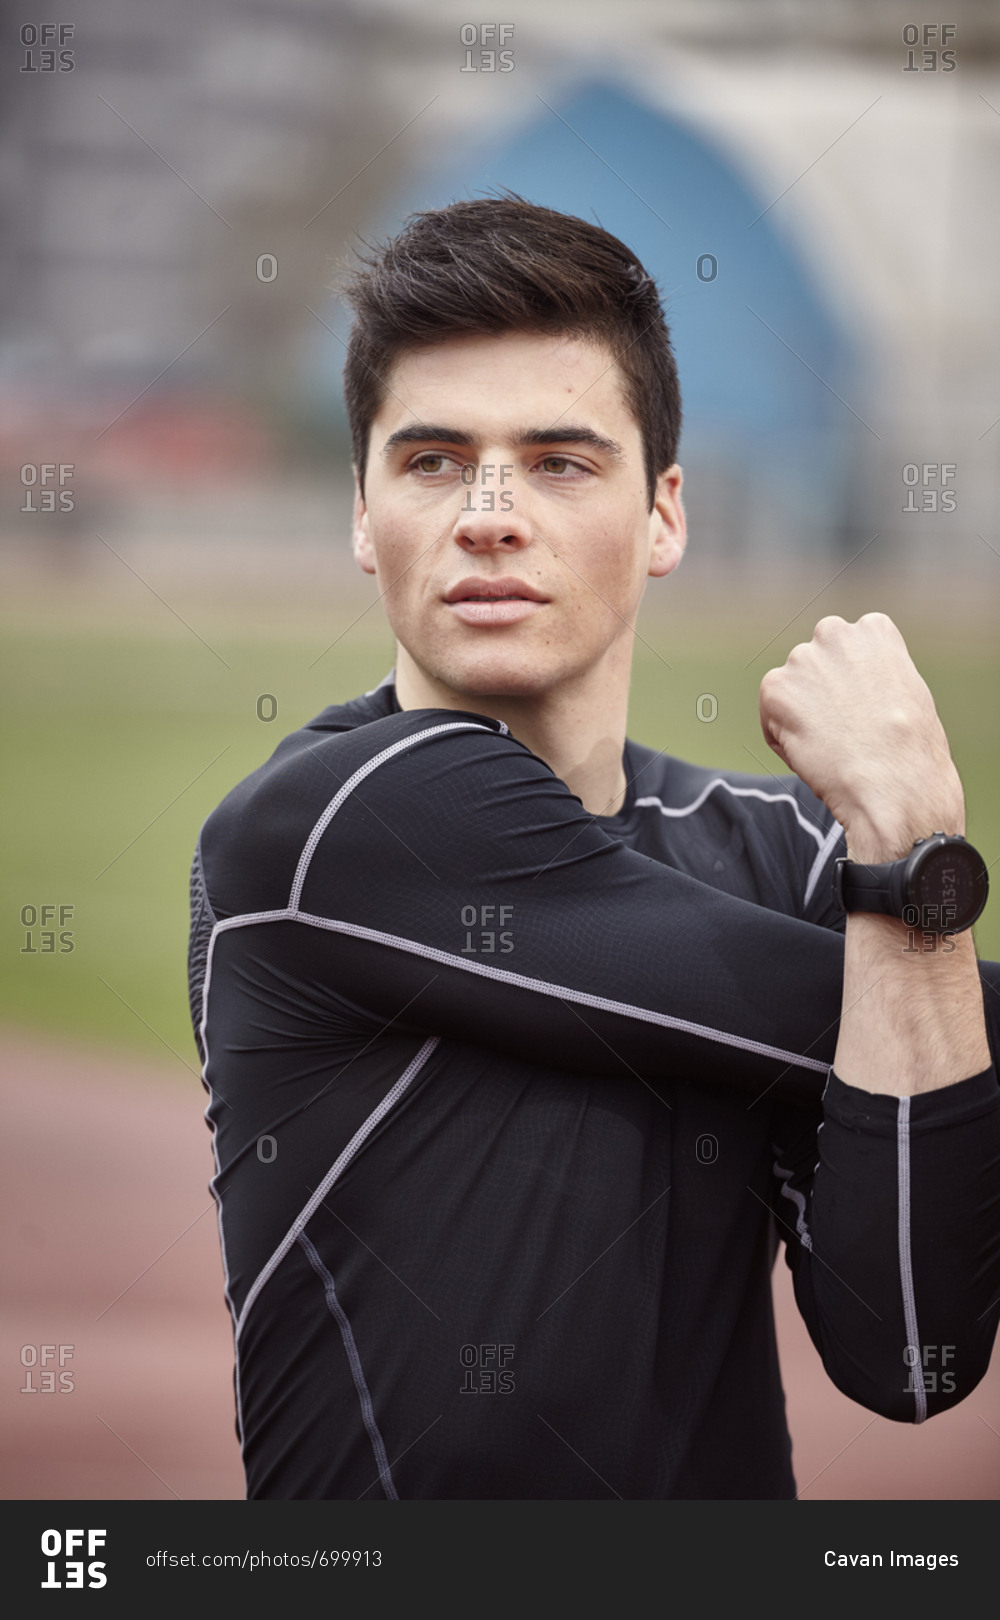 Male athlete exercising on sports track